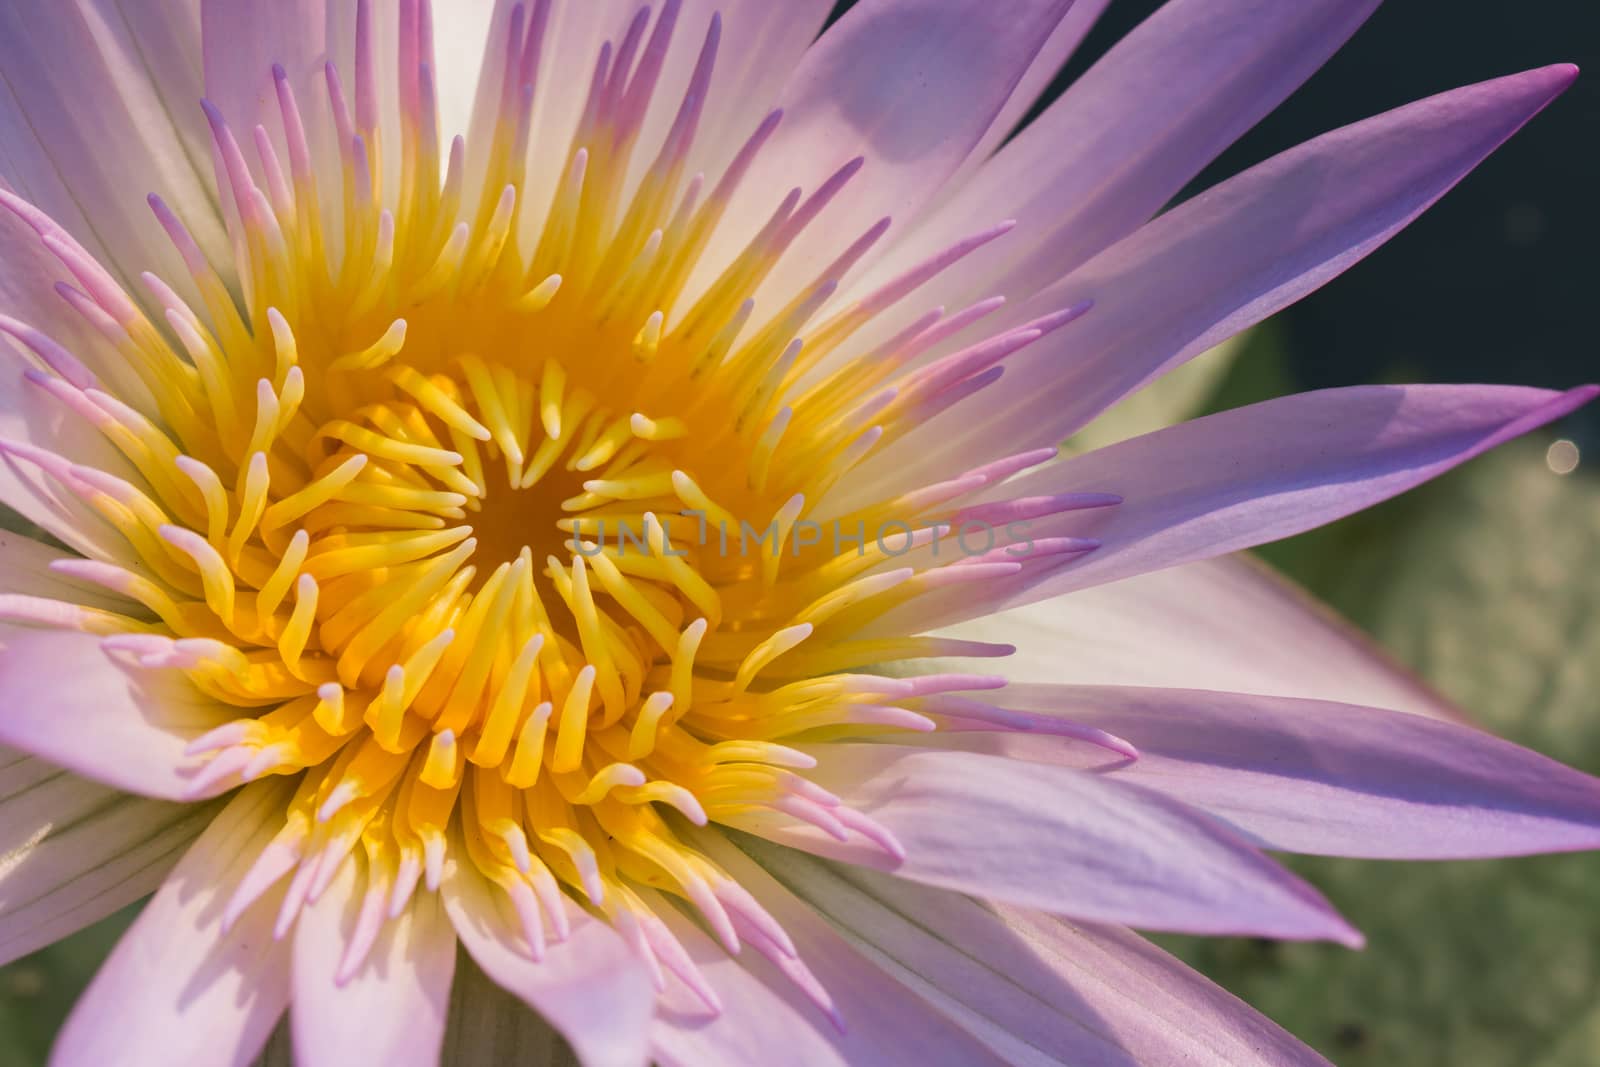 lotus flower closeup macro shot